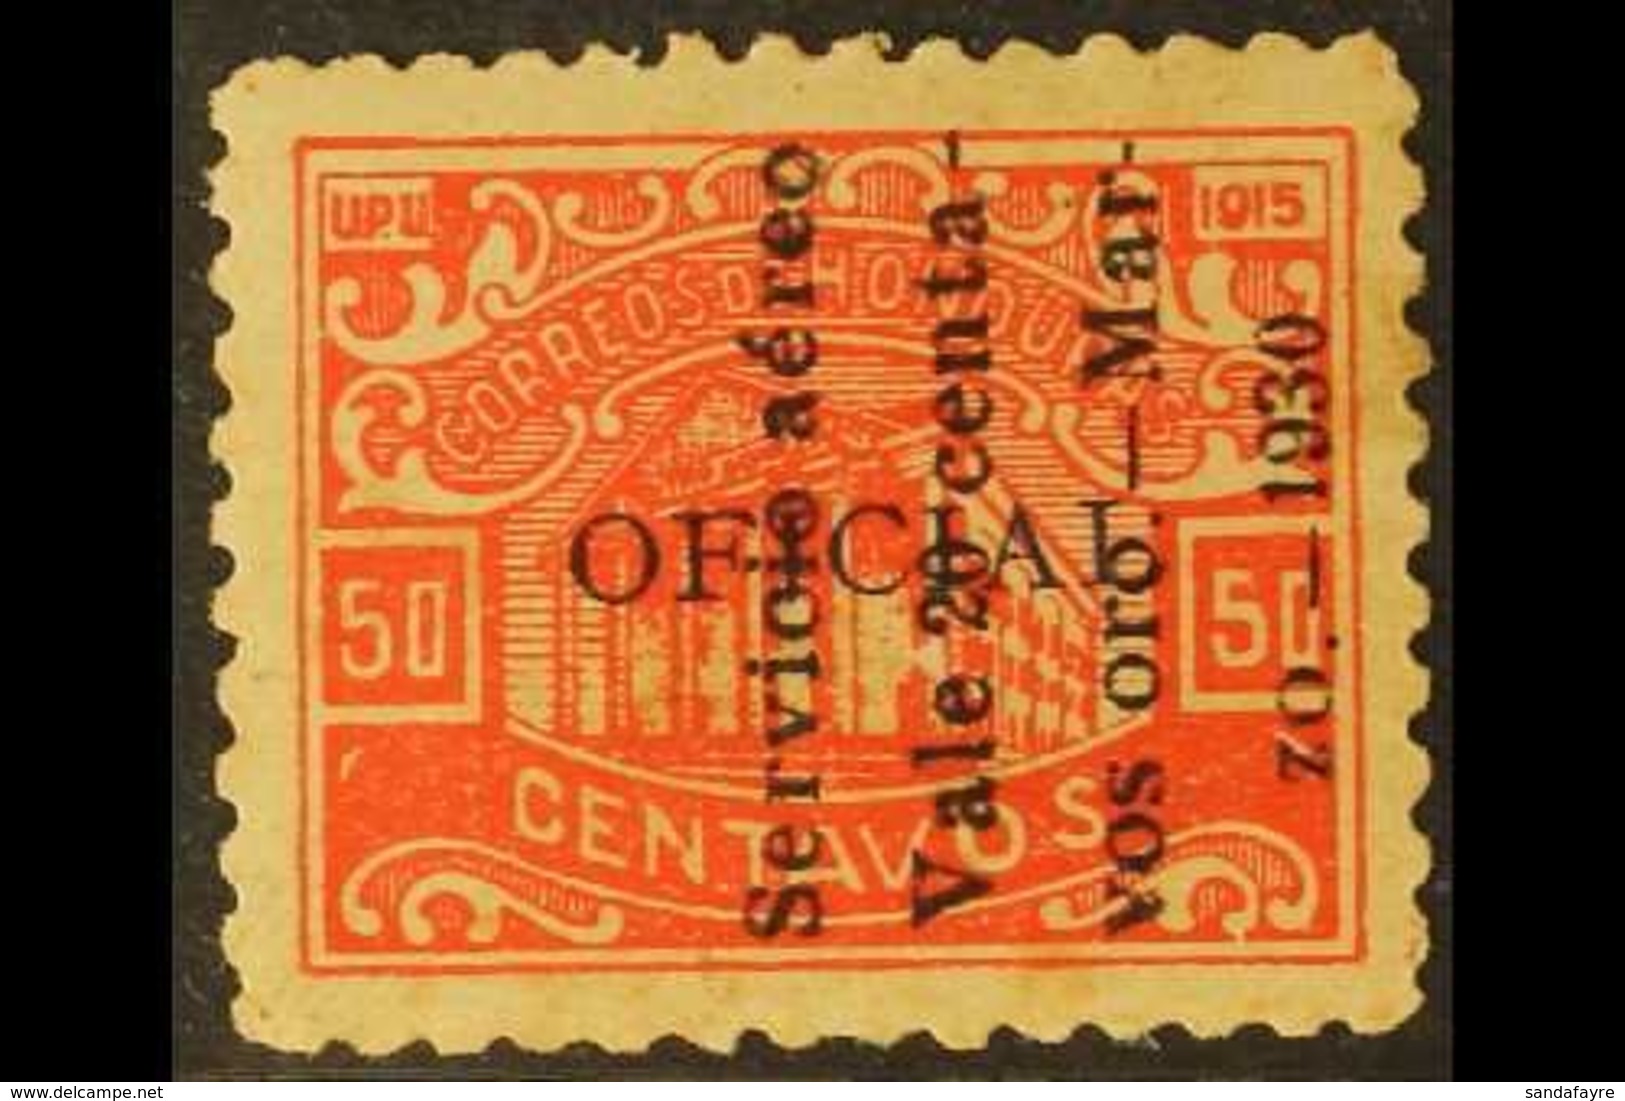 1930 AIR POST RARITY. 1920 20c On 50c Vermilion Official Stamp With 4- Line "Servicio Aereo / Vale 20 Cena- / Vos Oro. - - Honduras